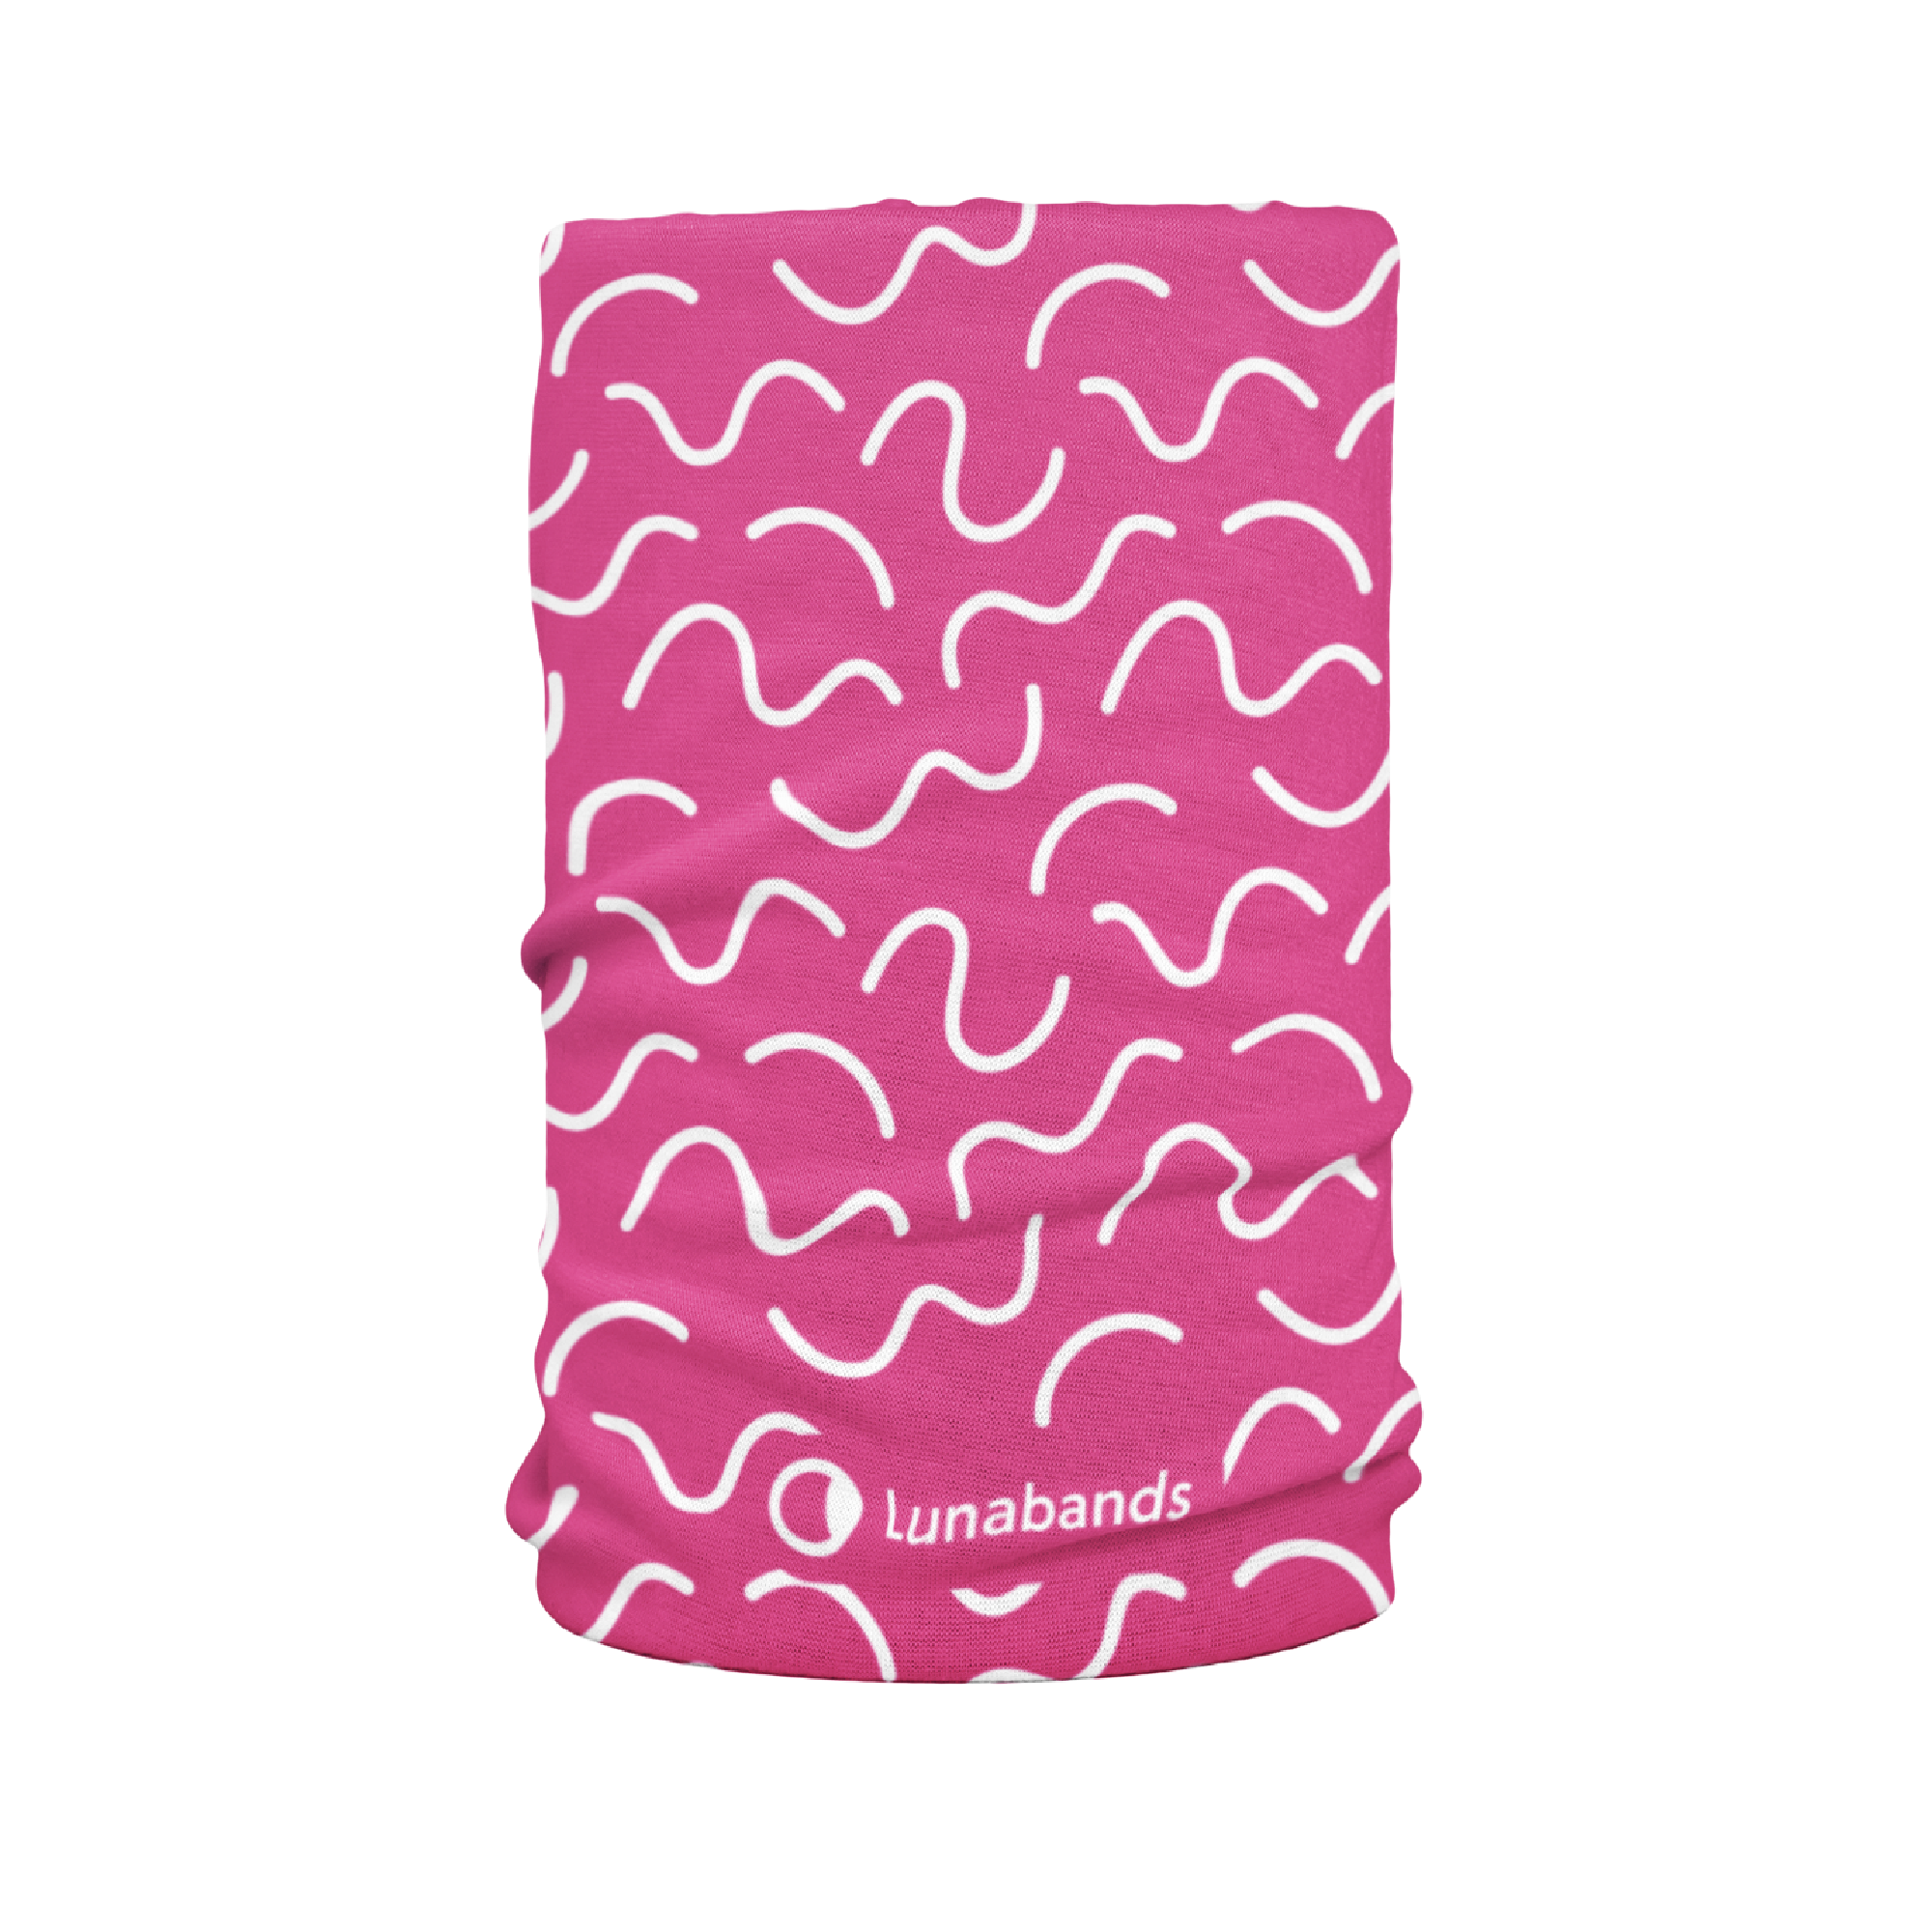 Lunabands Core Designer Multi Use Multifunctional Running Sports Fitness Adventure Bandana Headband Snood Active Headbands 